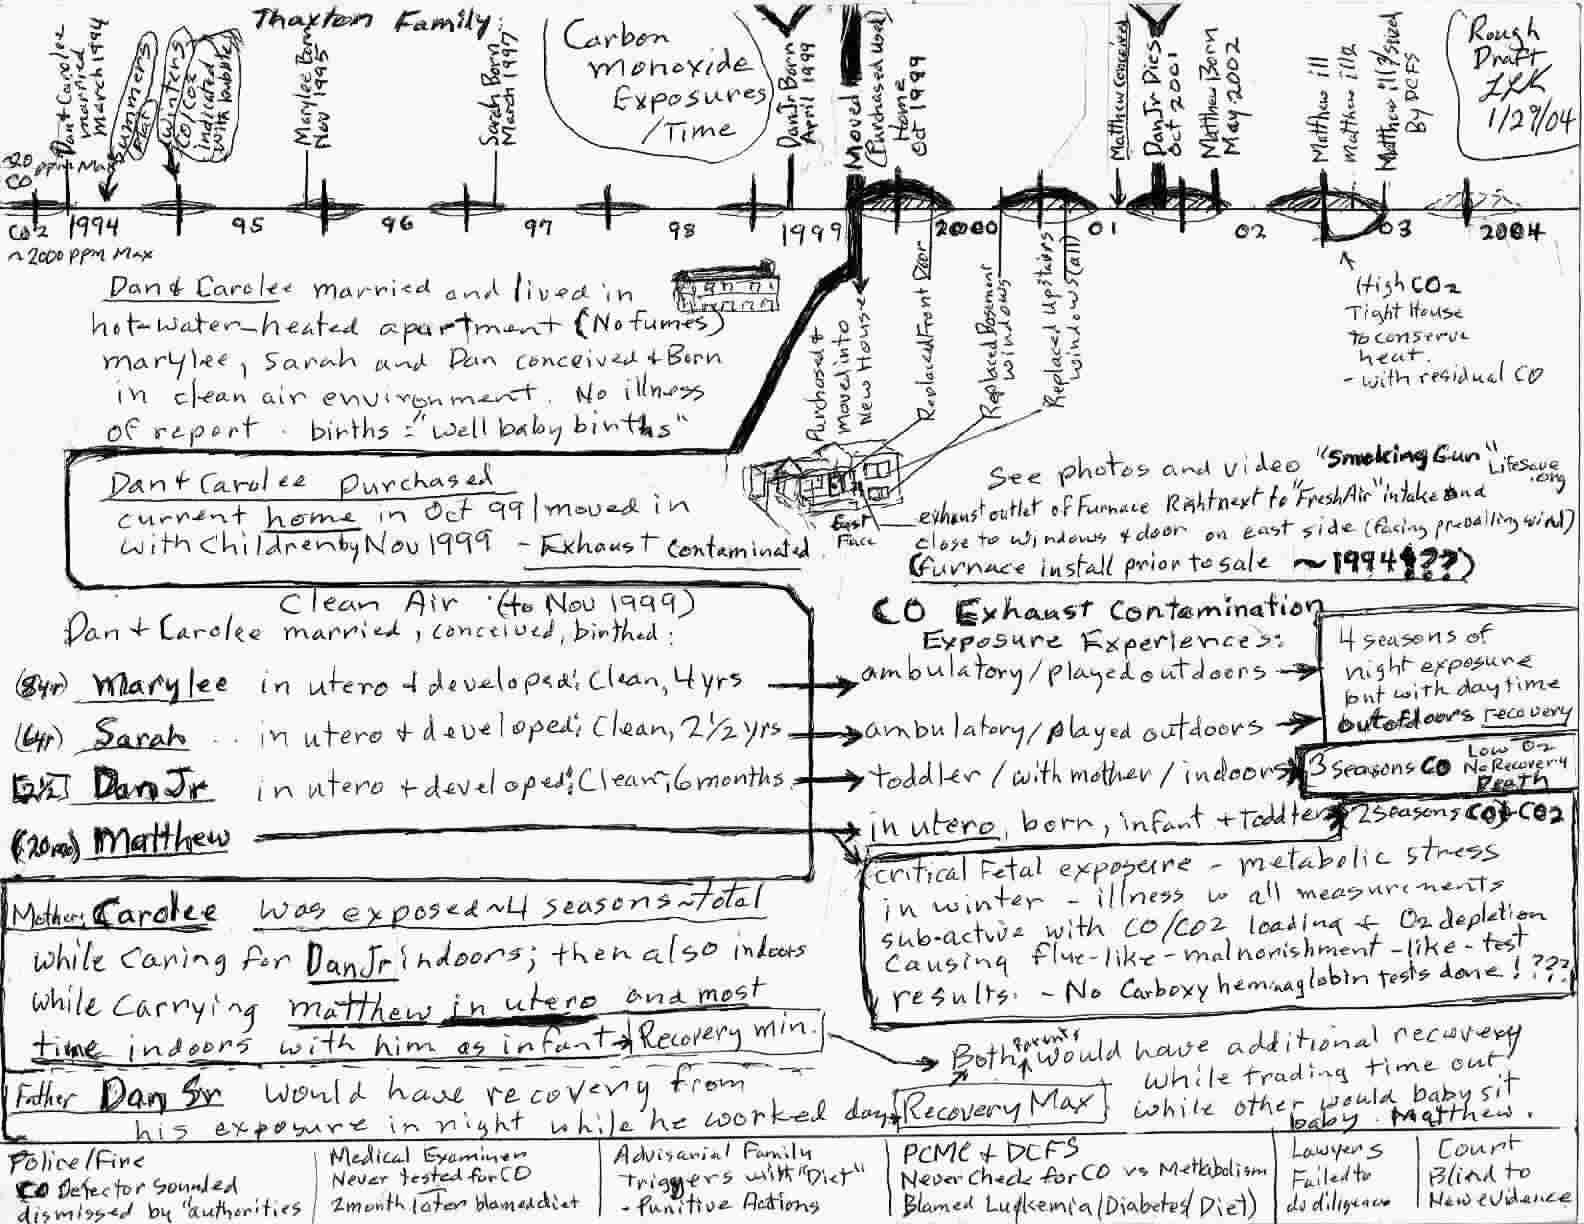 Time line chart - Original rough draft - TLR 1/27/04